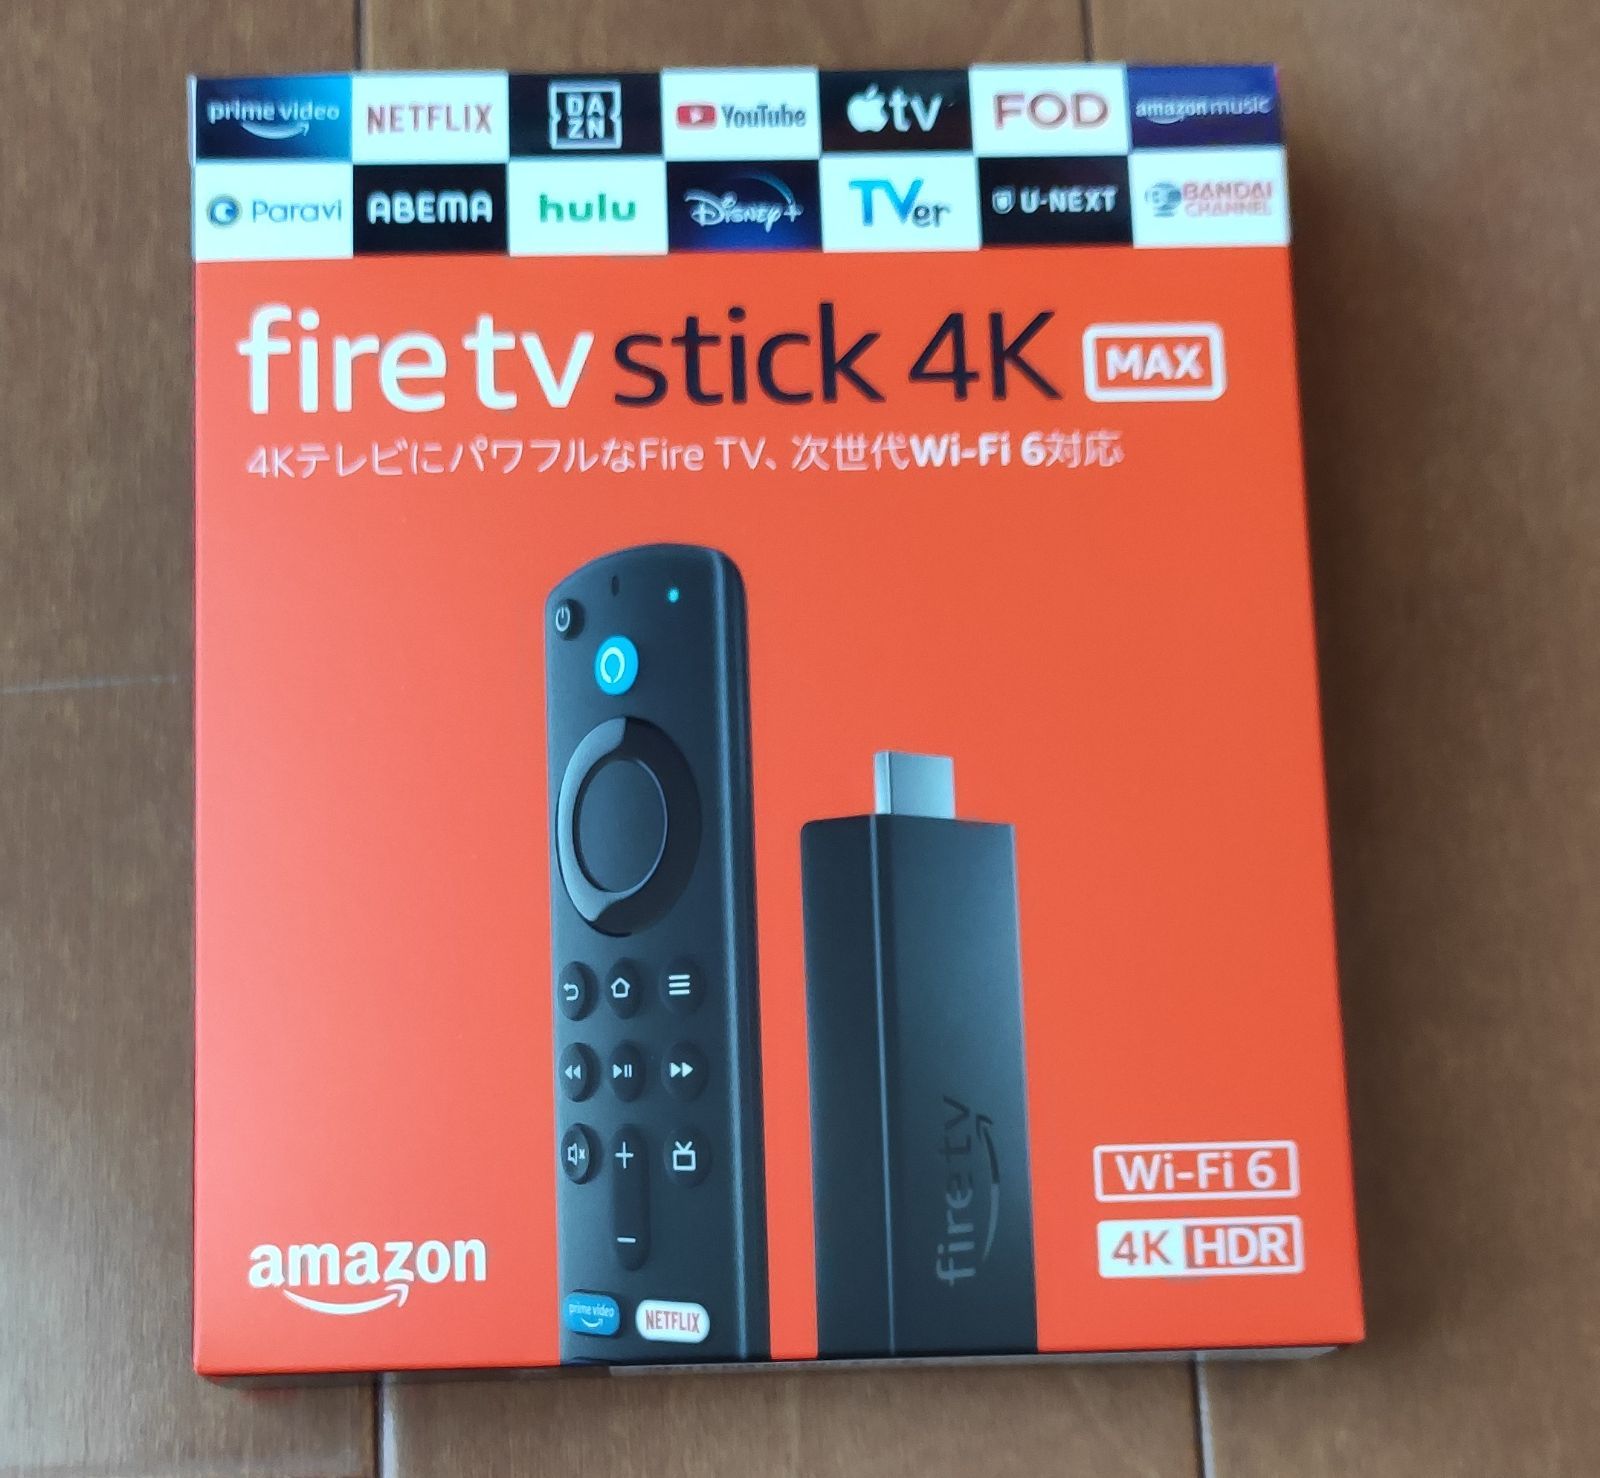  Fire TV Stick 4K Max